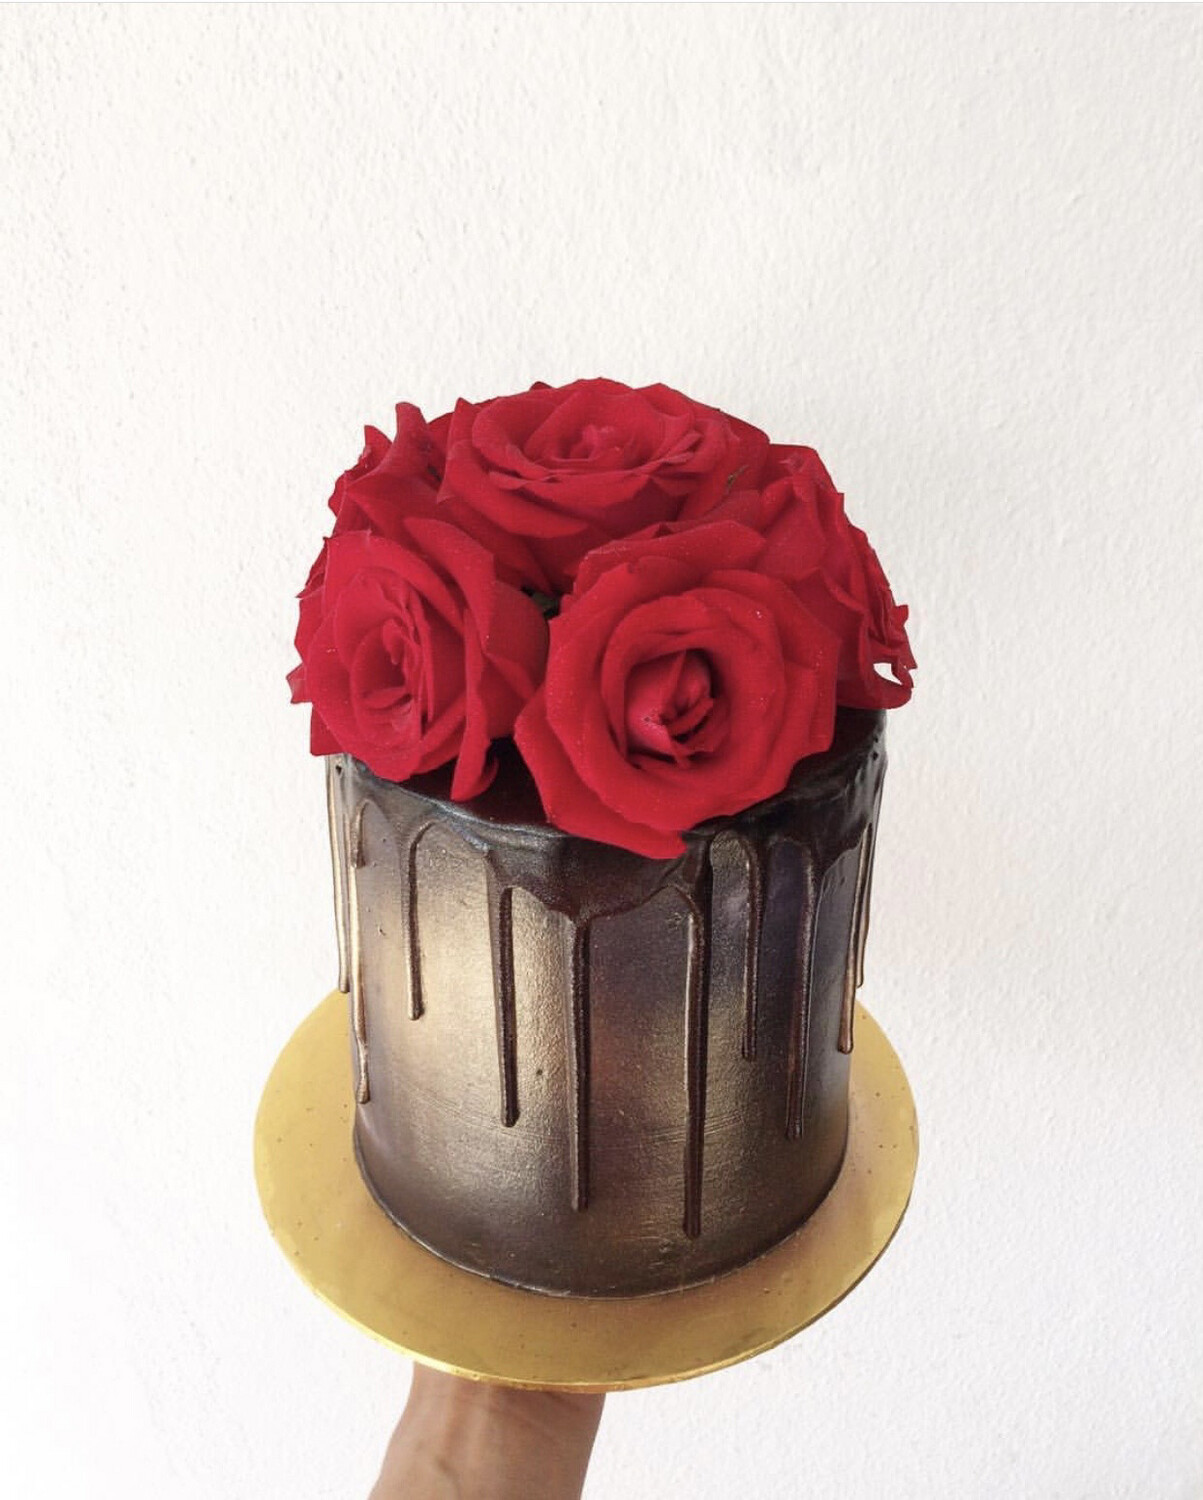 Red Rose On Black Cake